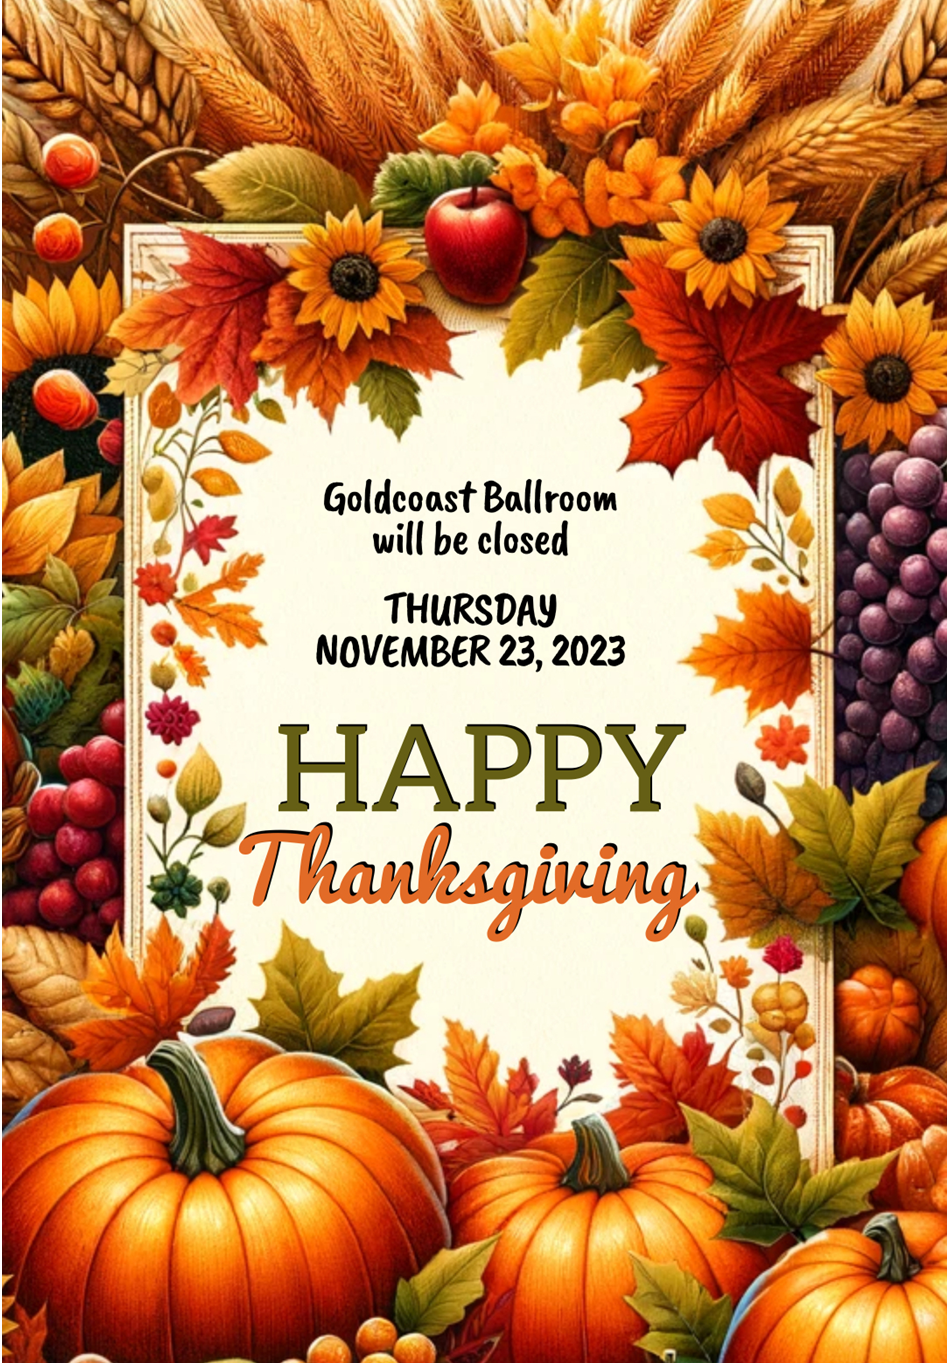 Ballroom Closed November 23, 2023 - Happy Thanksgiving!